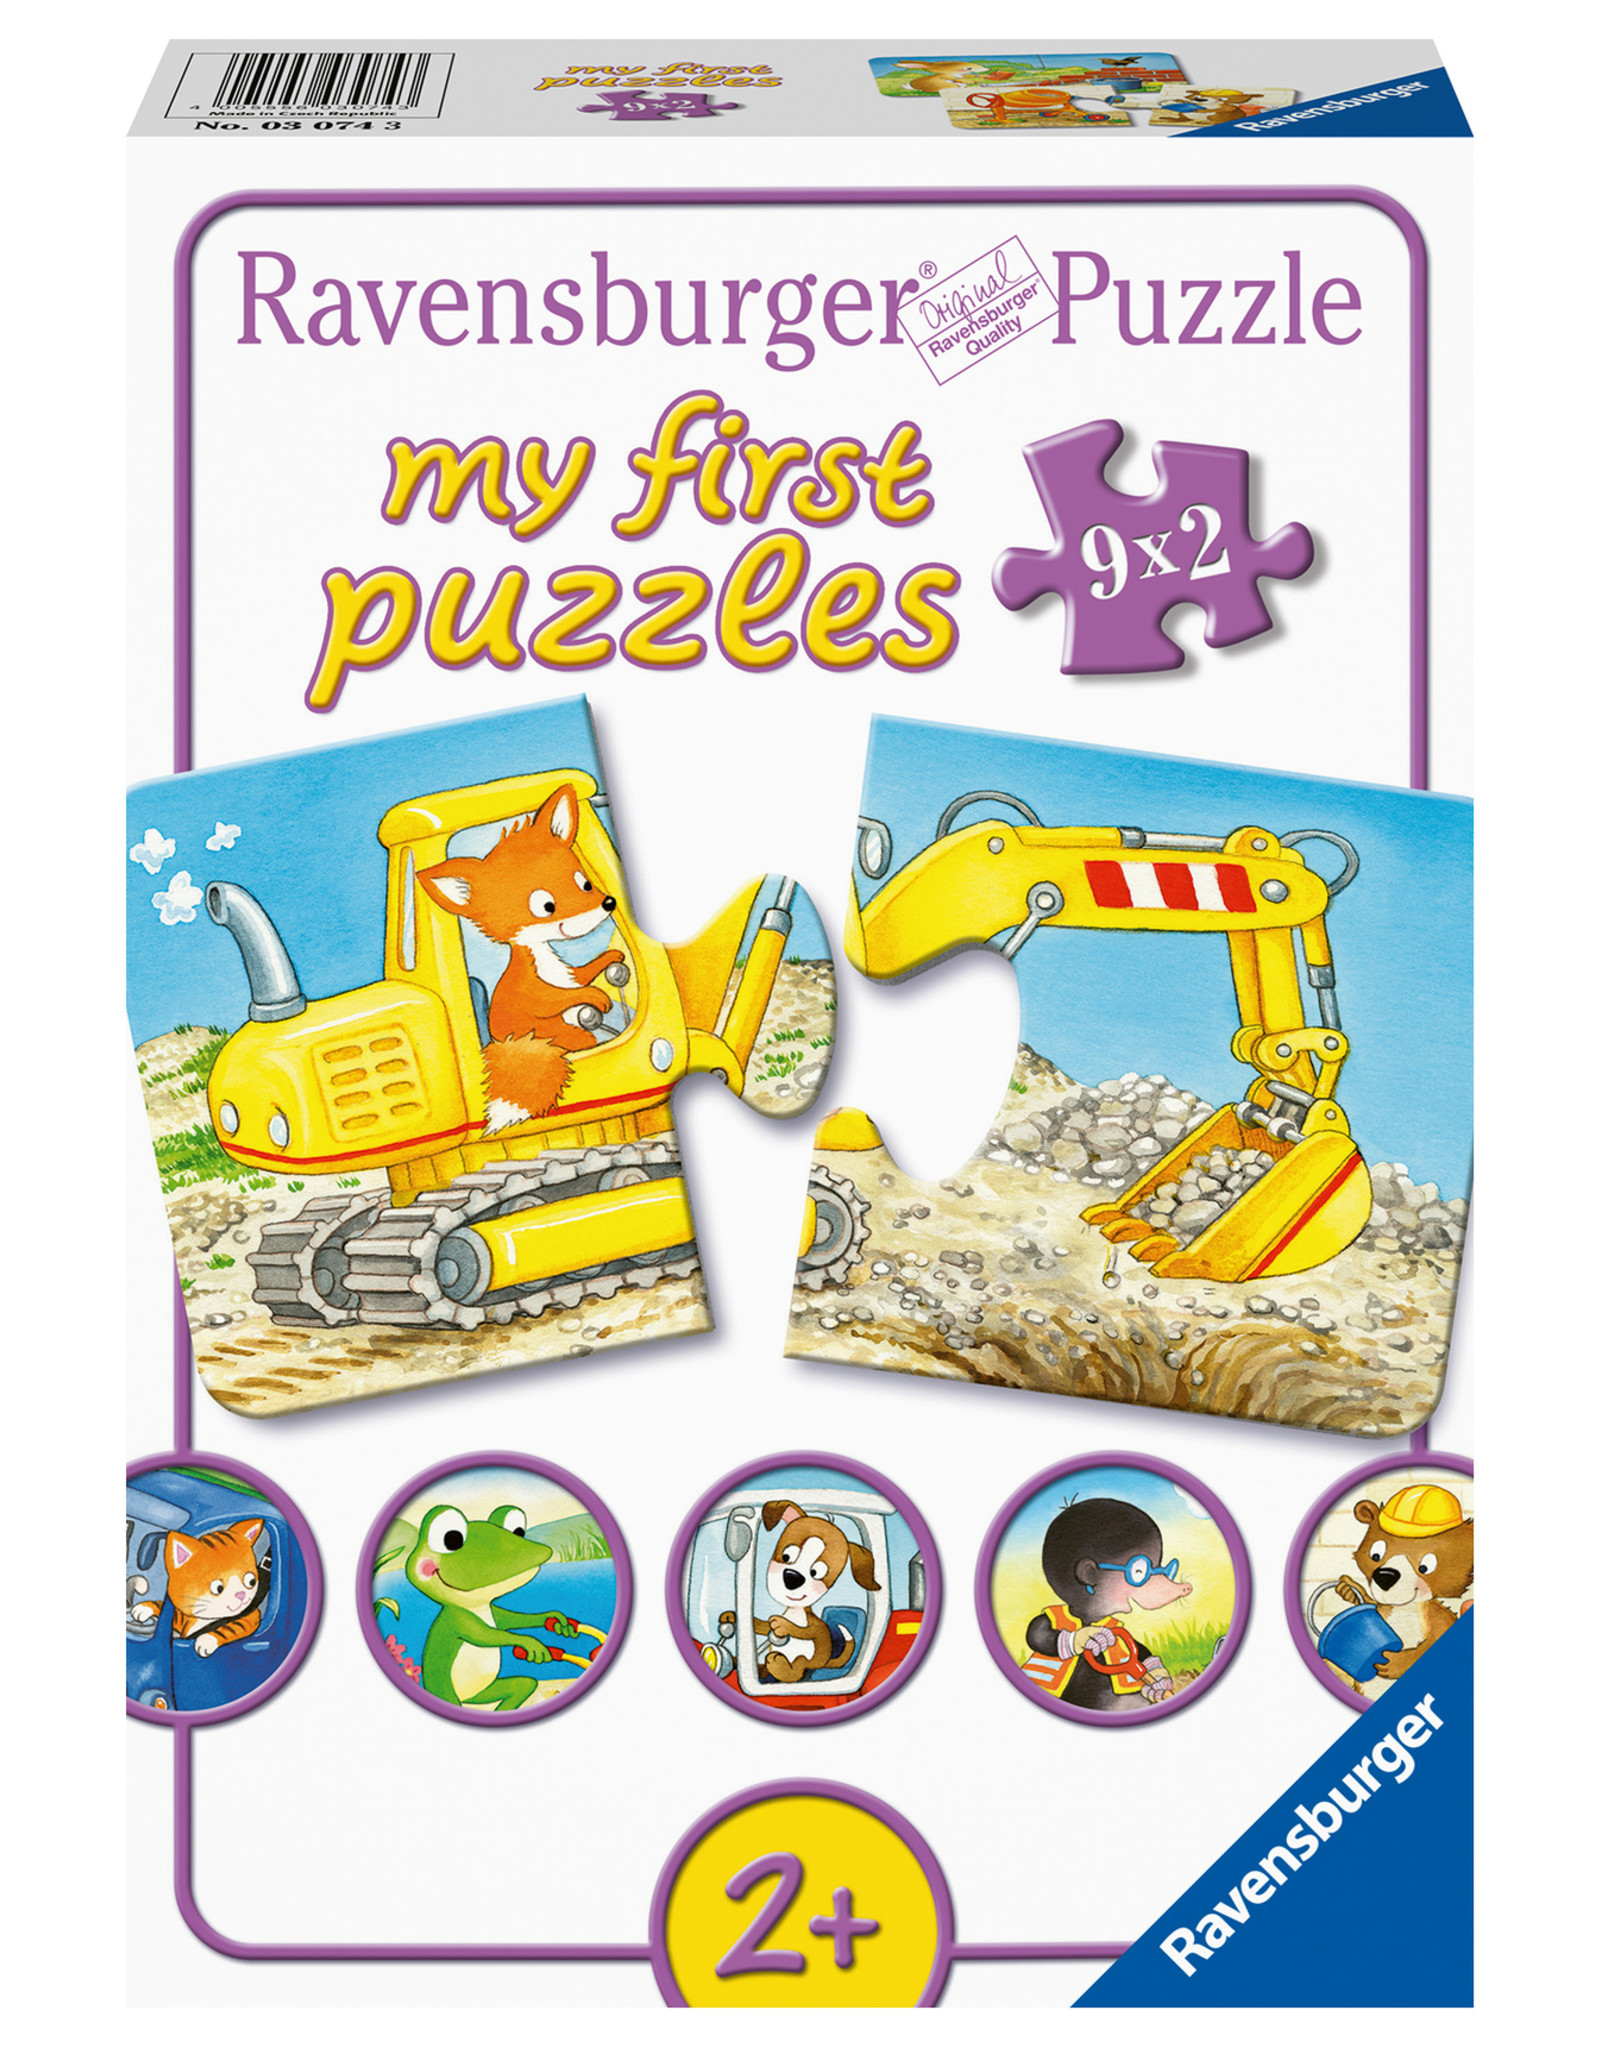 Ravensburger Ravensburger Puzzel 030743  My First Puzzles Dieren in de Bouw (9x2 Stukjes)